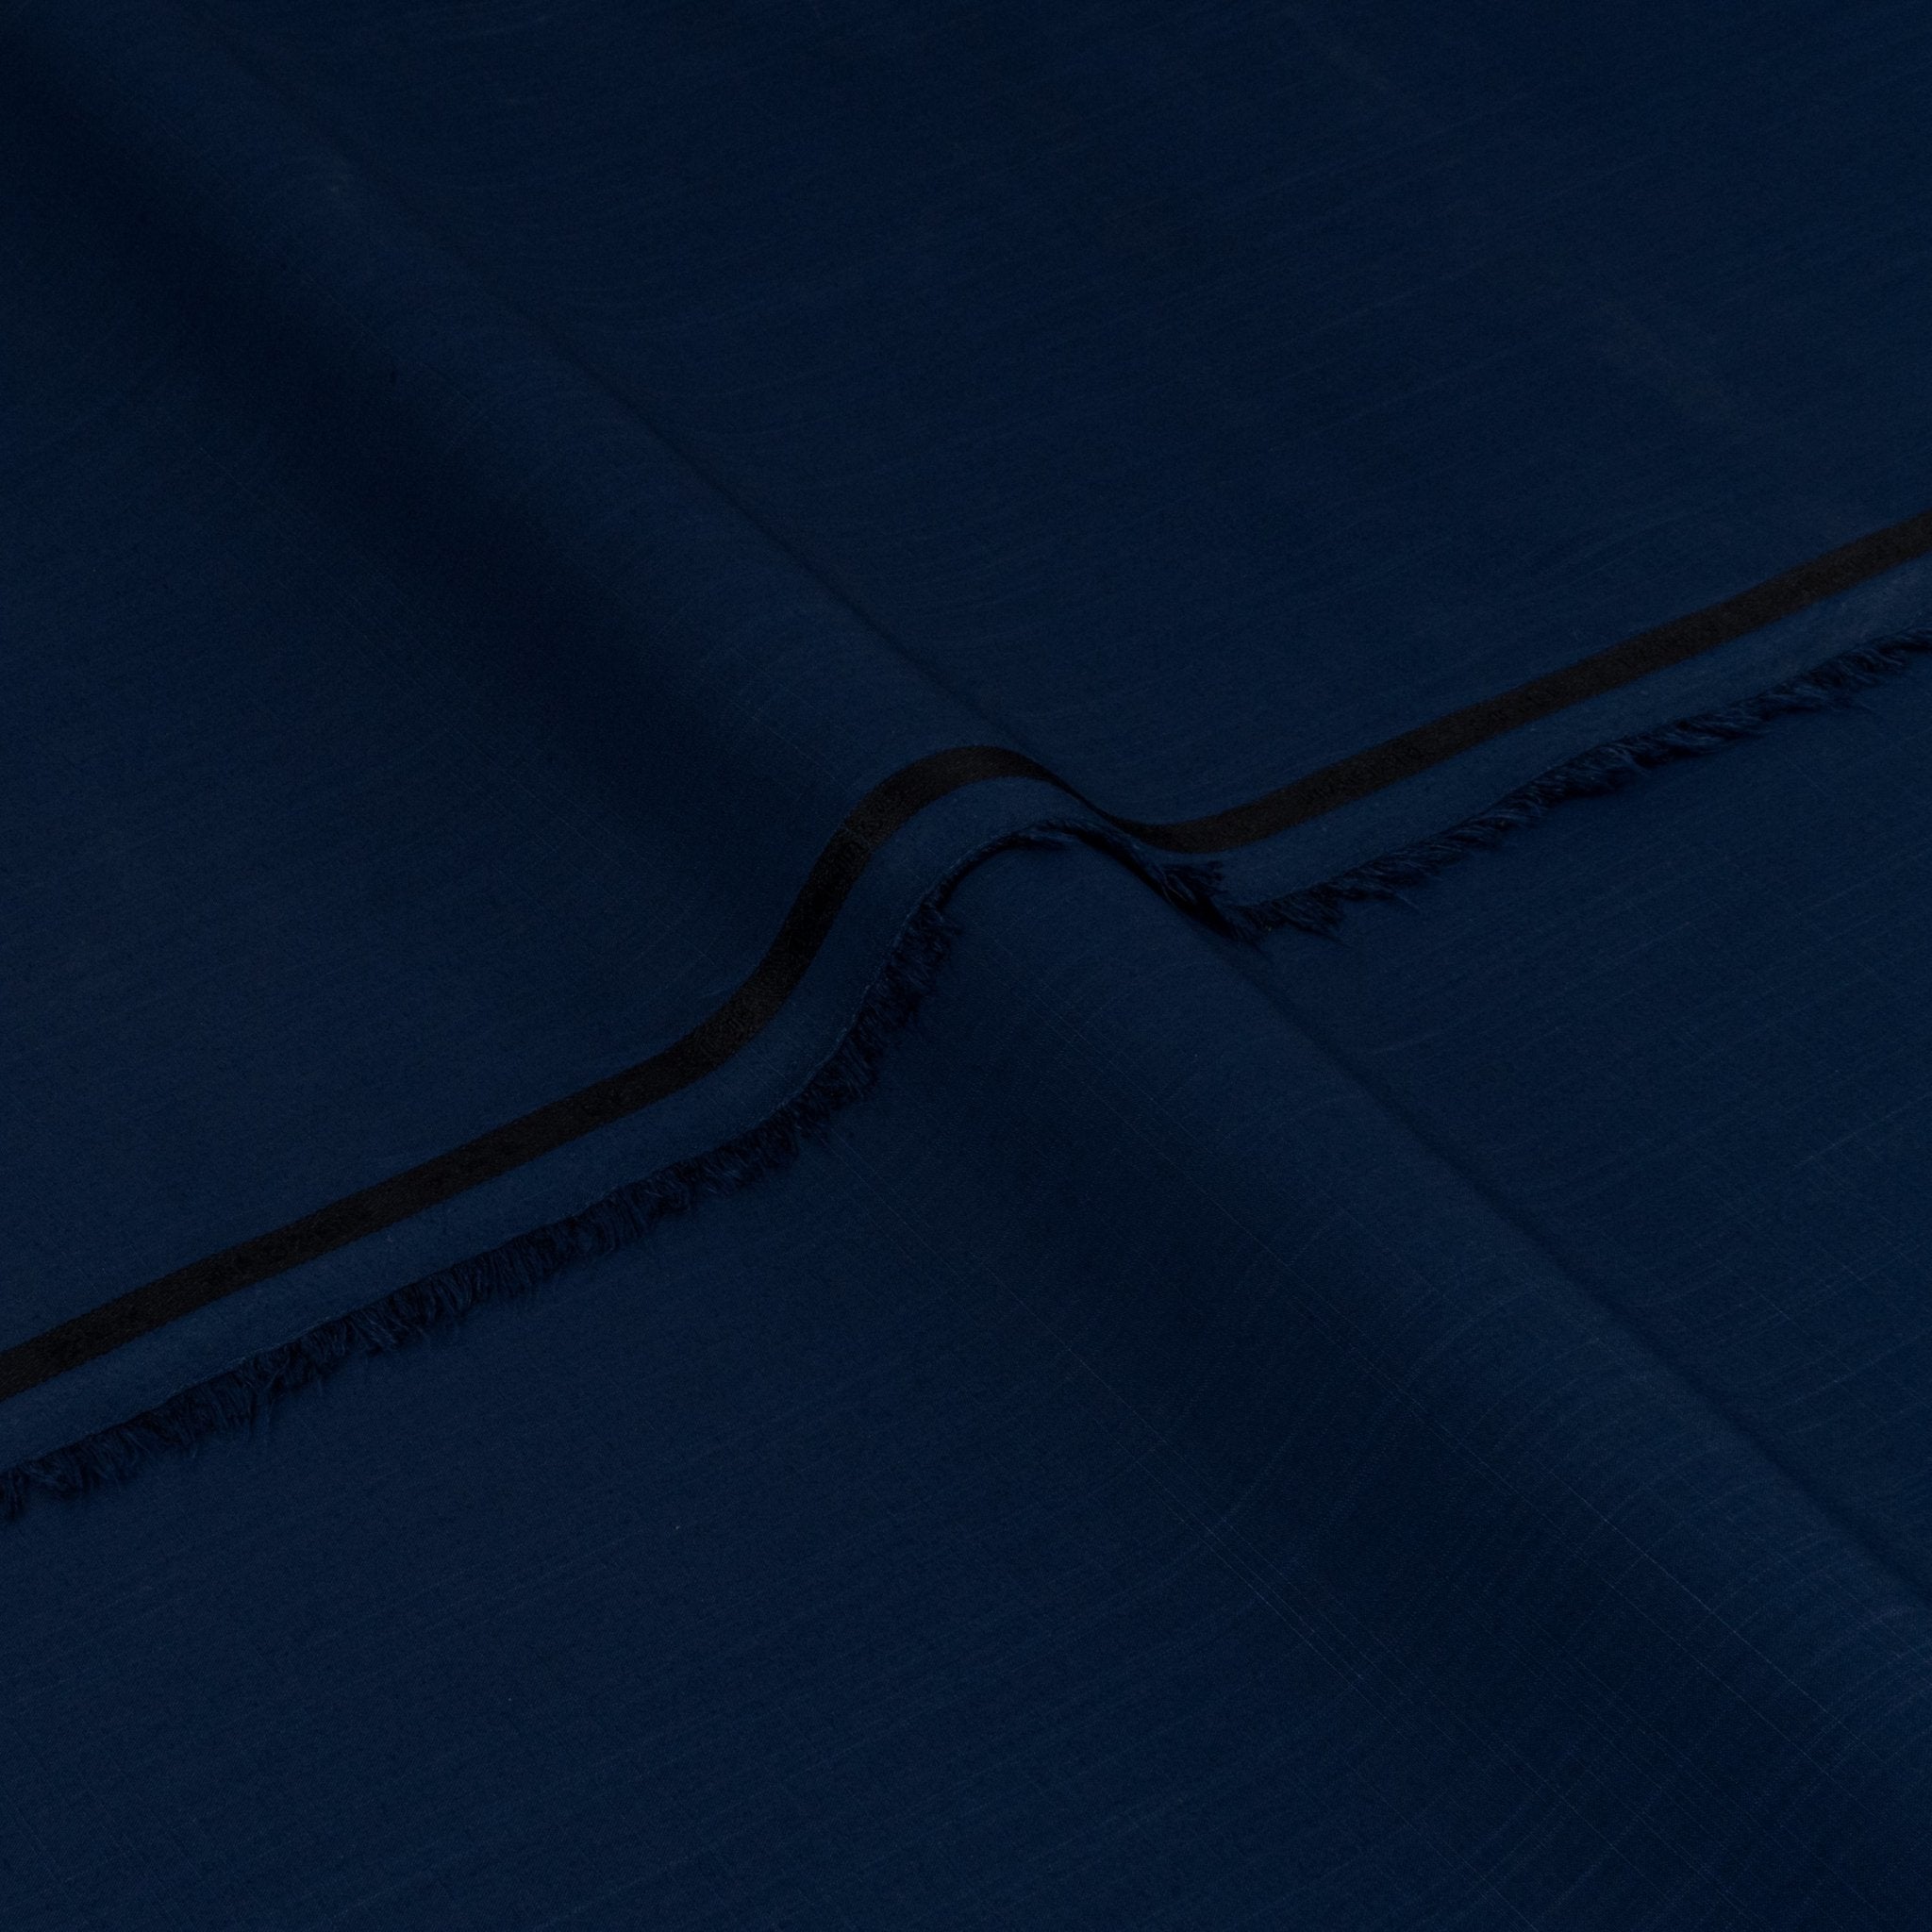 Frozen - Summer Blended (4.5 Mtr) - Narkin's Textile Industries